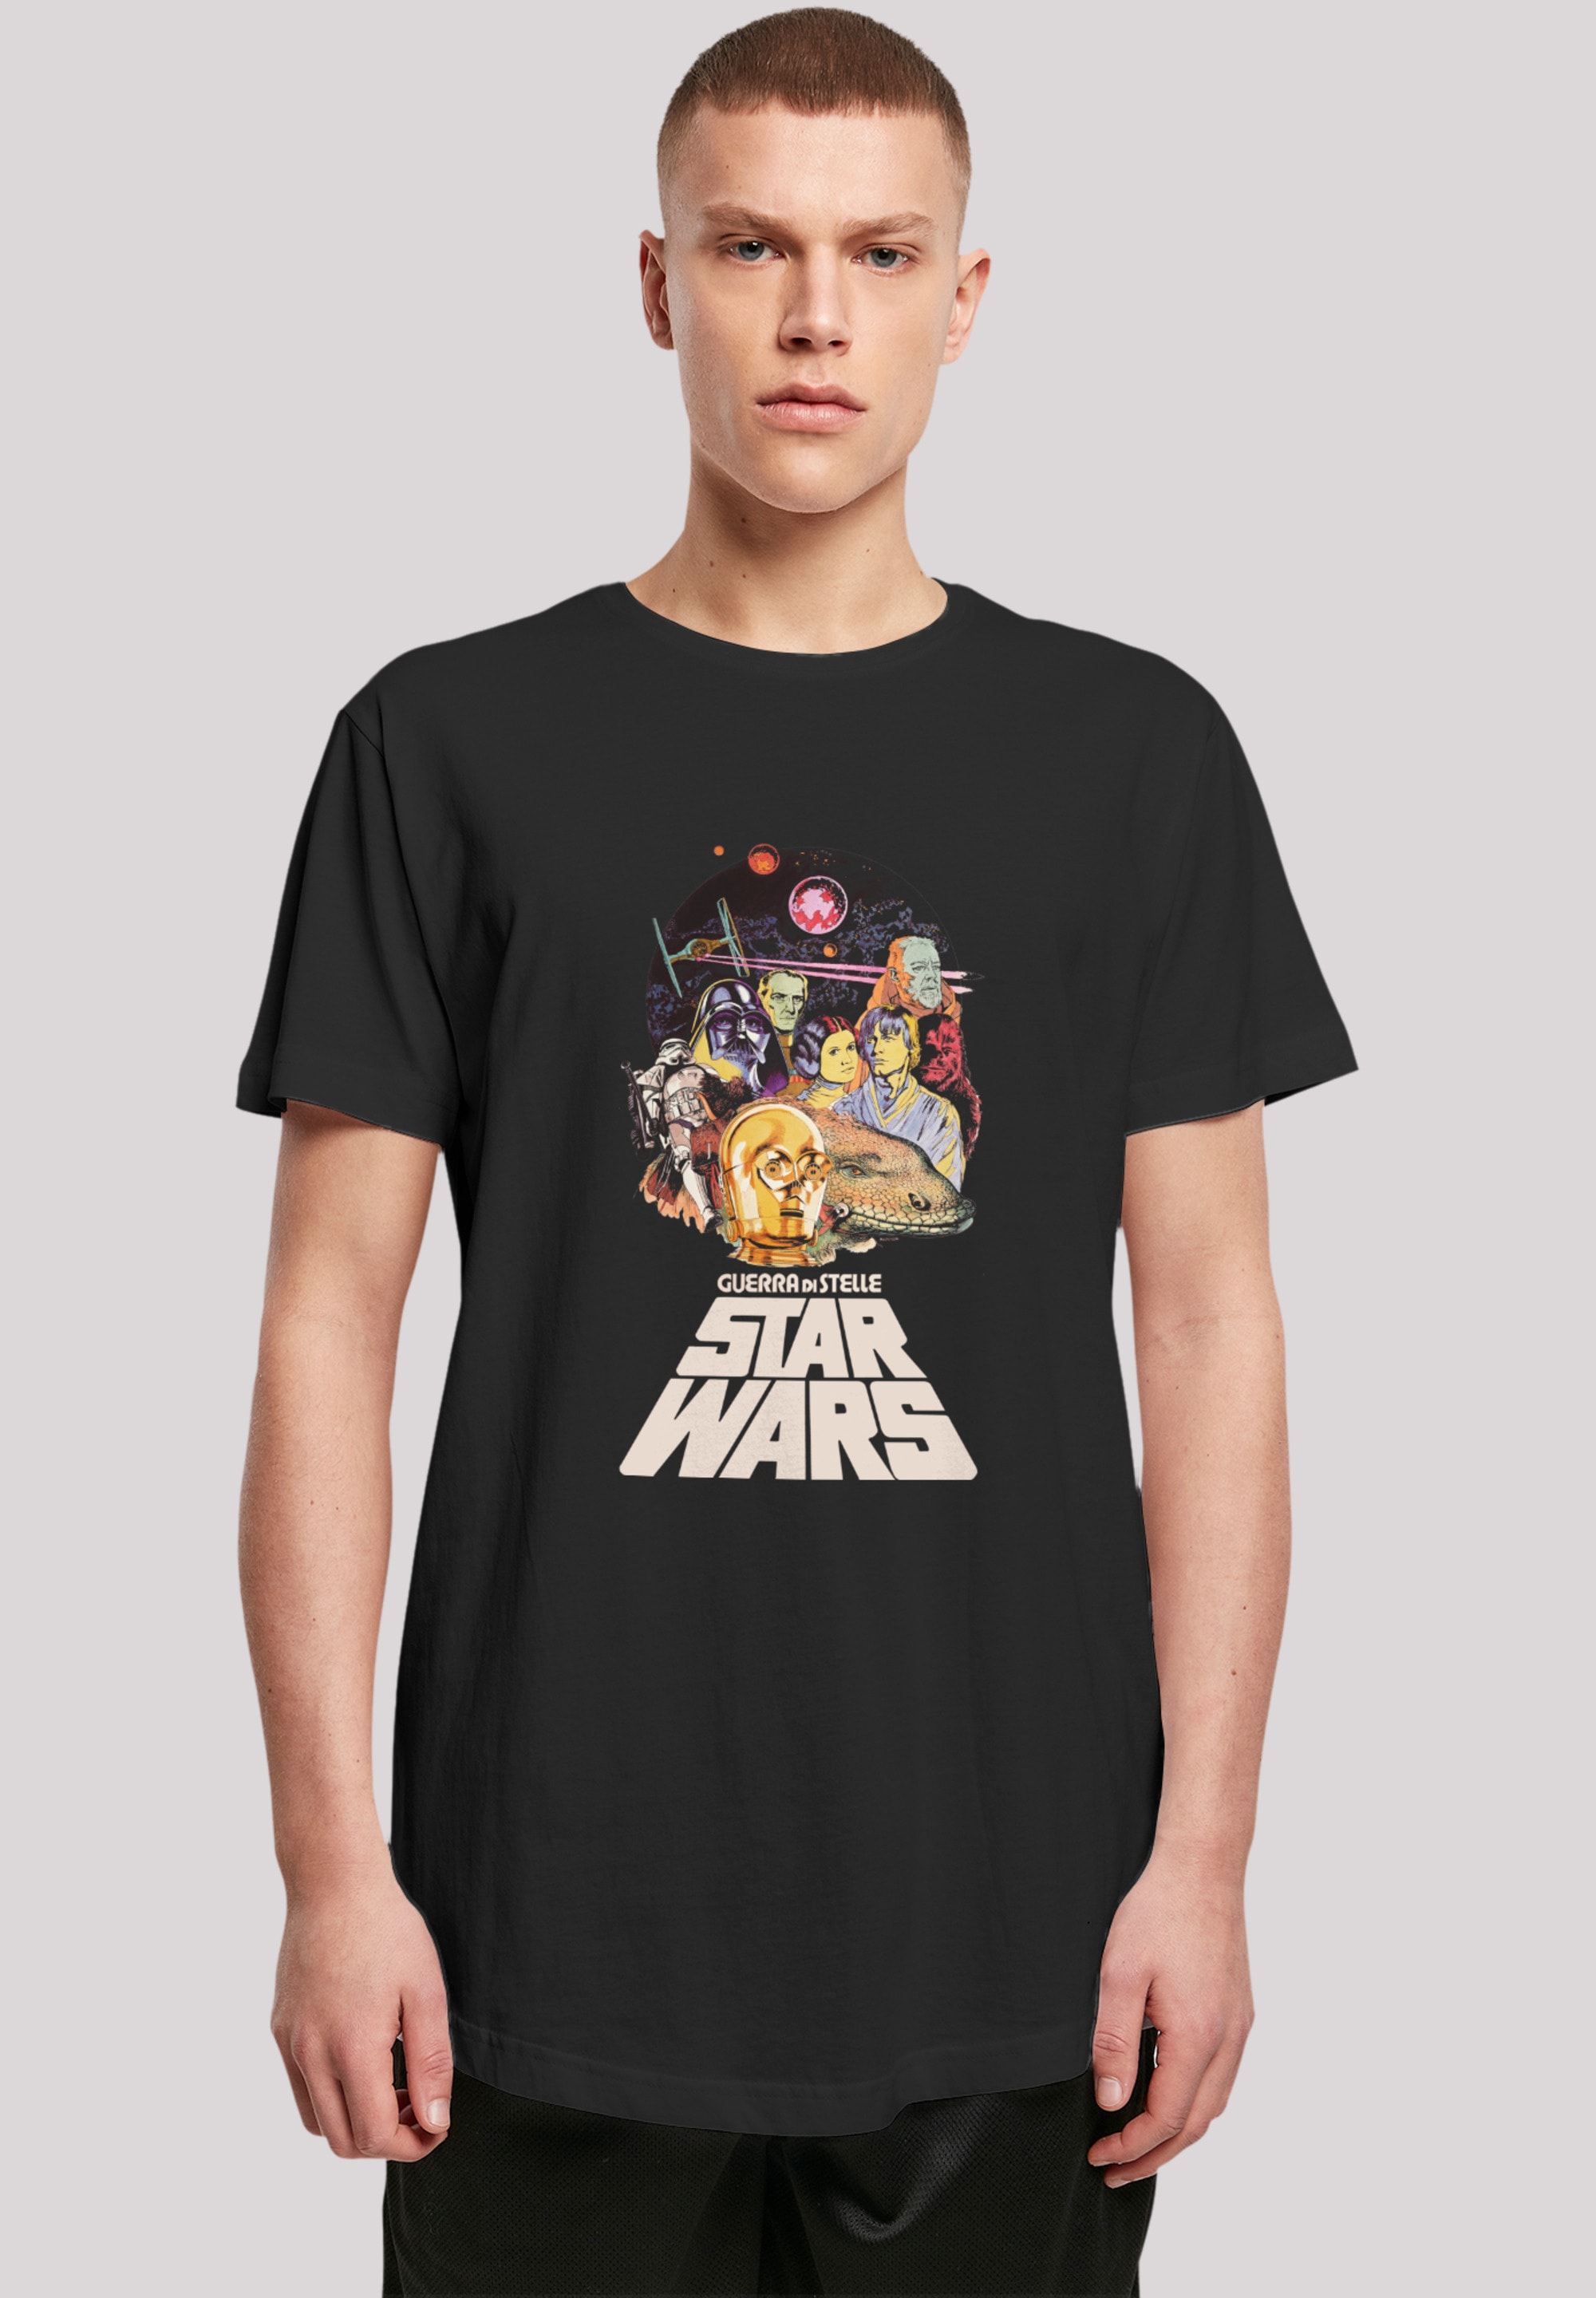 T-Shirt »Star Wars Guerra Di Stelle«, Premium Qualität